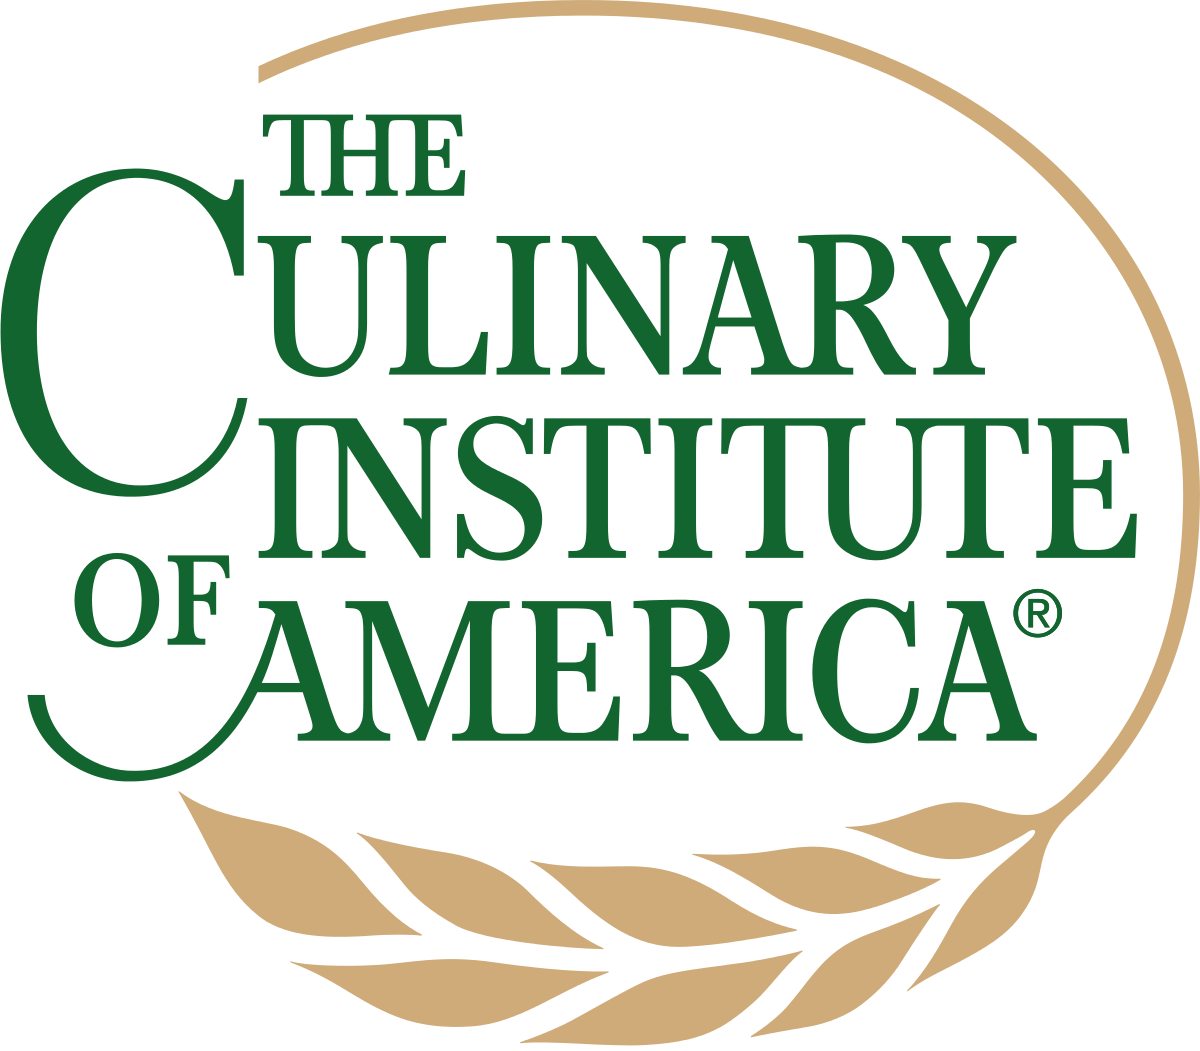 john Thompson the culinary institute of america